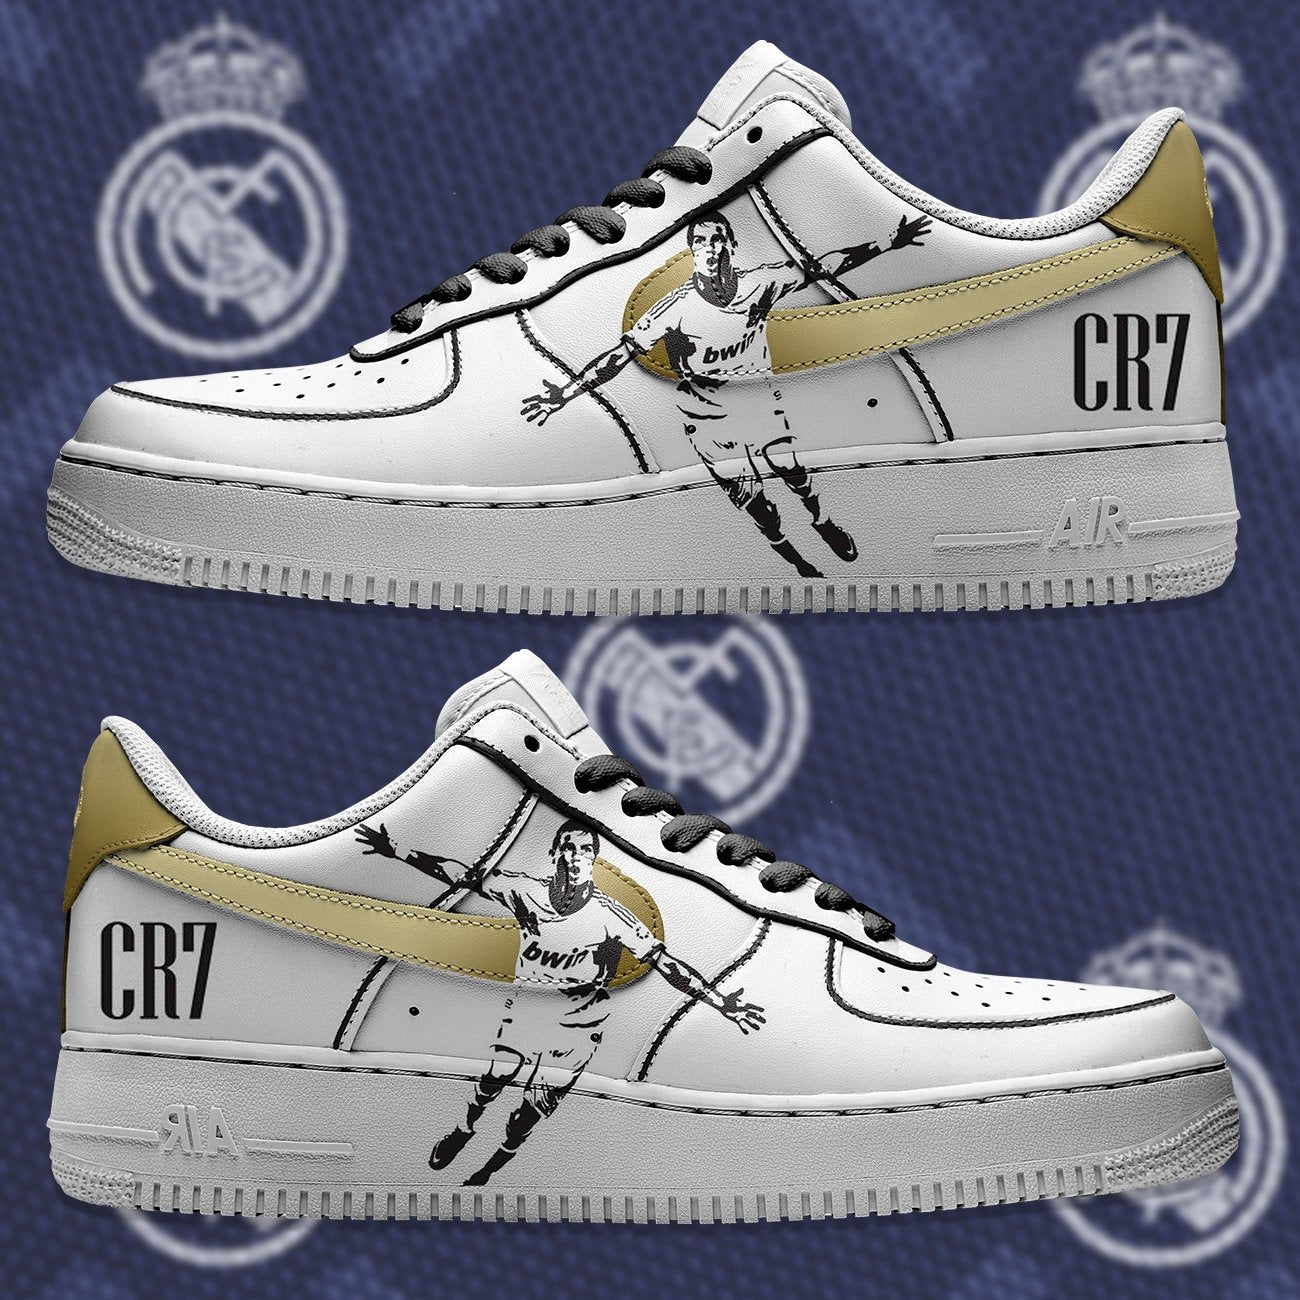 Nike Air Force 1 CR7 for Cristiano Ronaldo